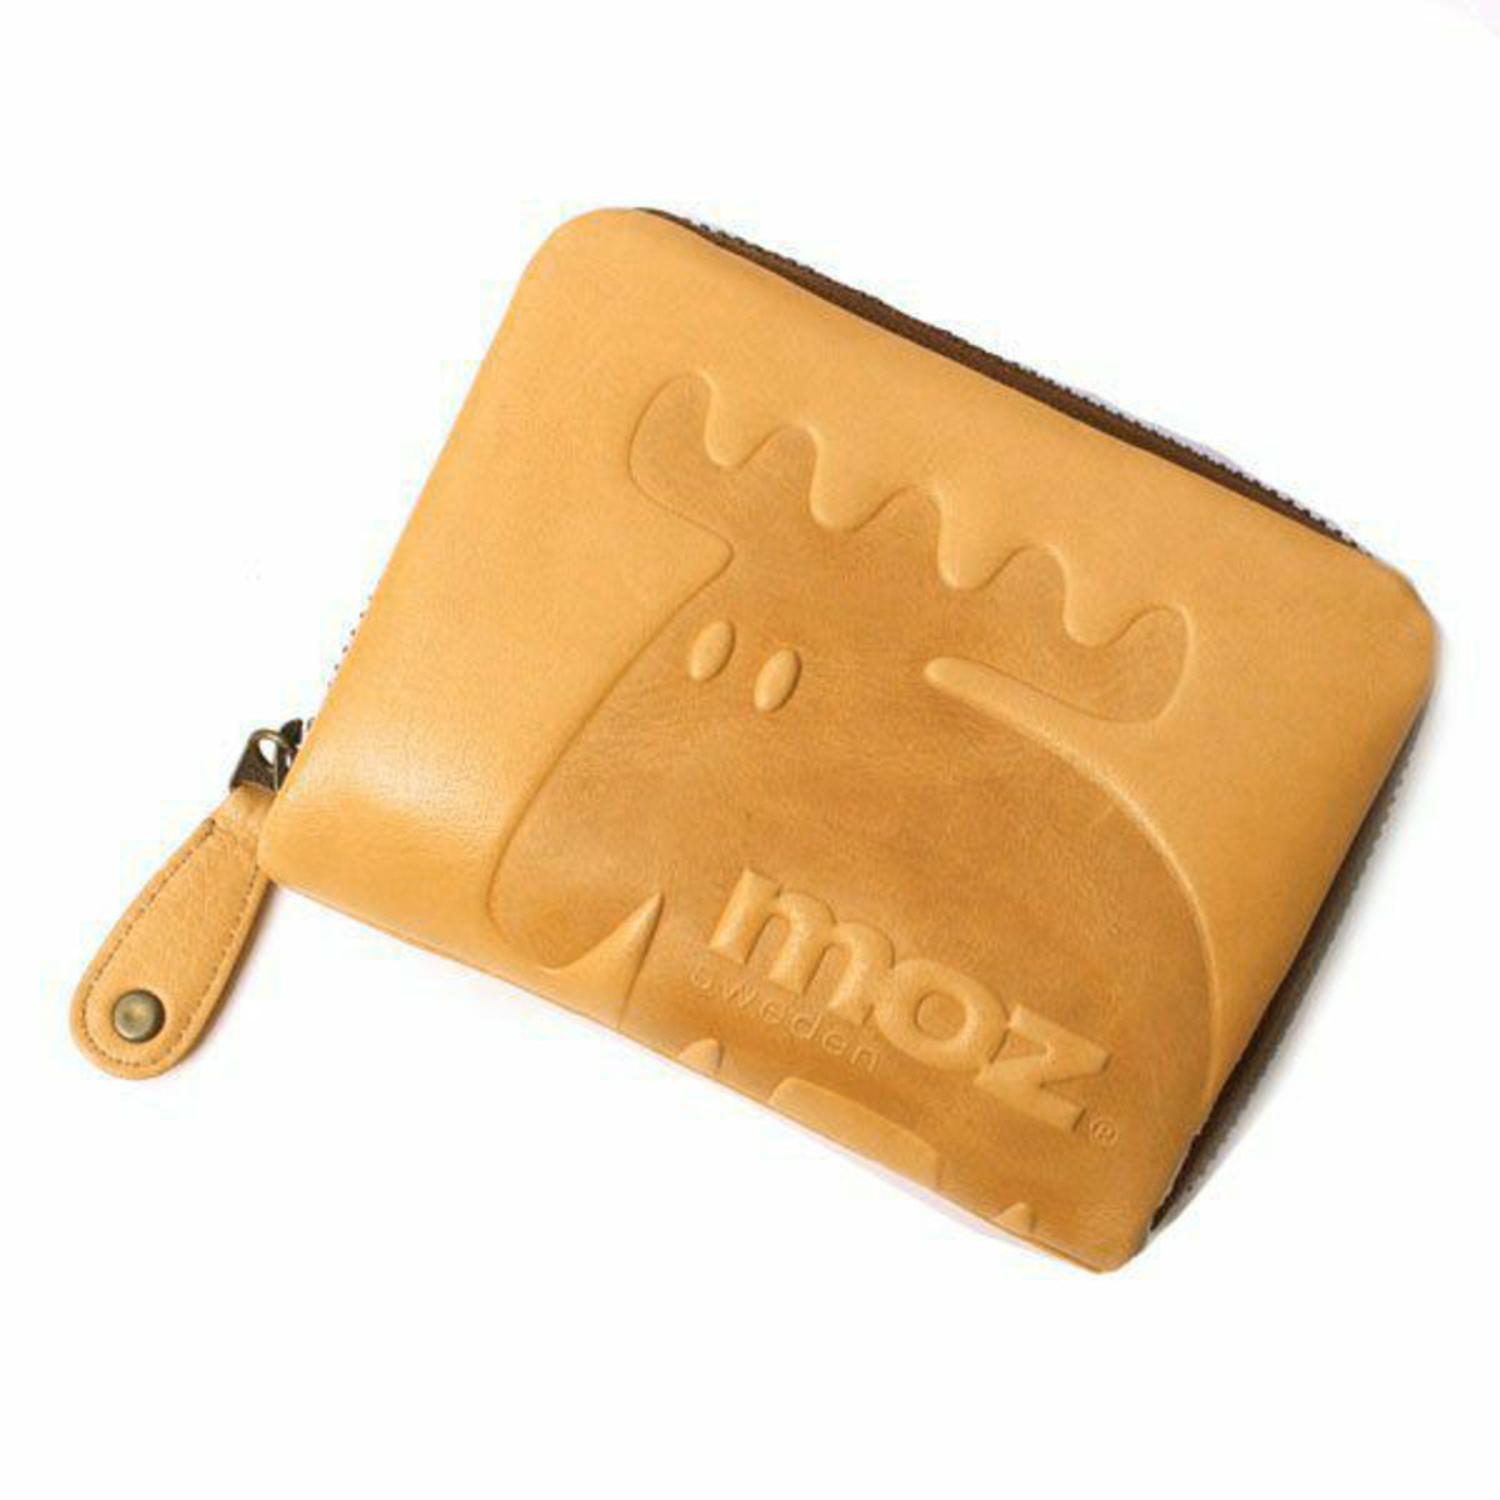 moz モズ ZNWE-86000 袋縫いR二つ折り財布 | バックヤードファミリー 